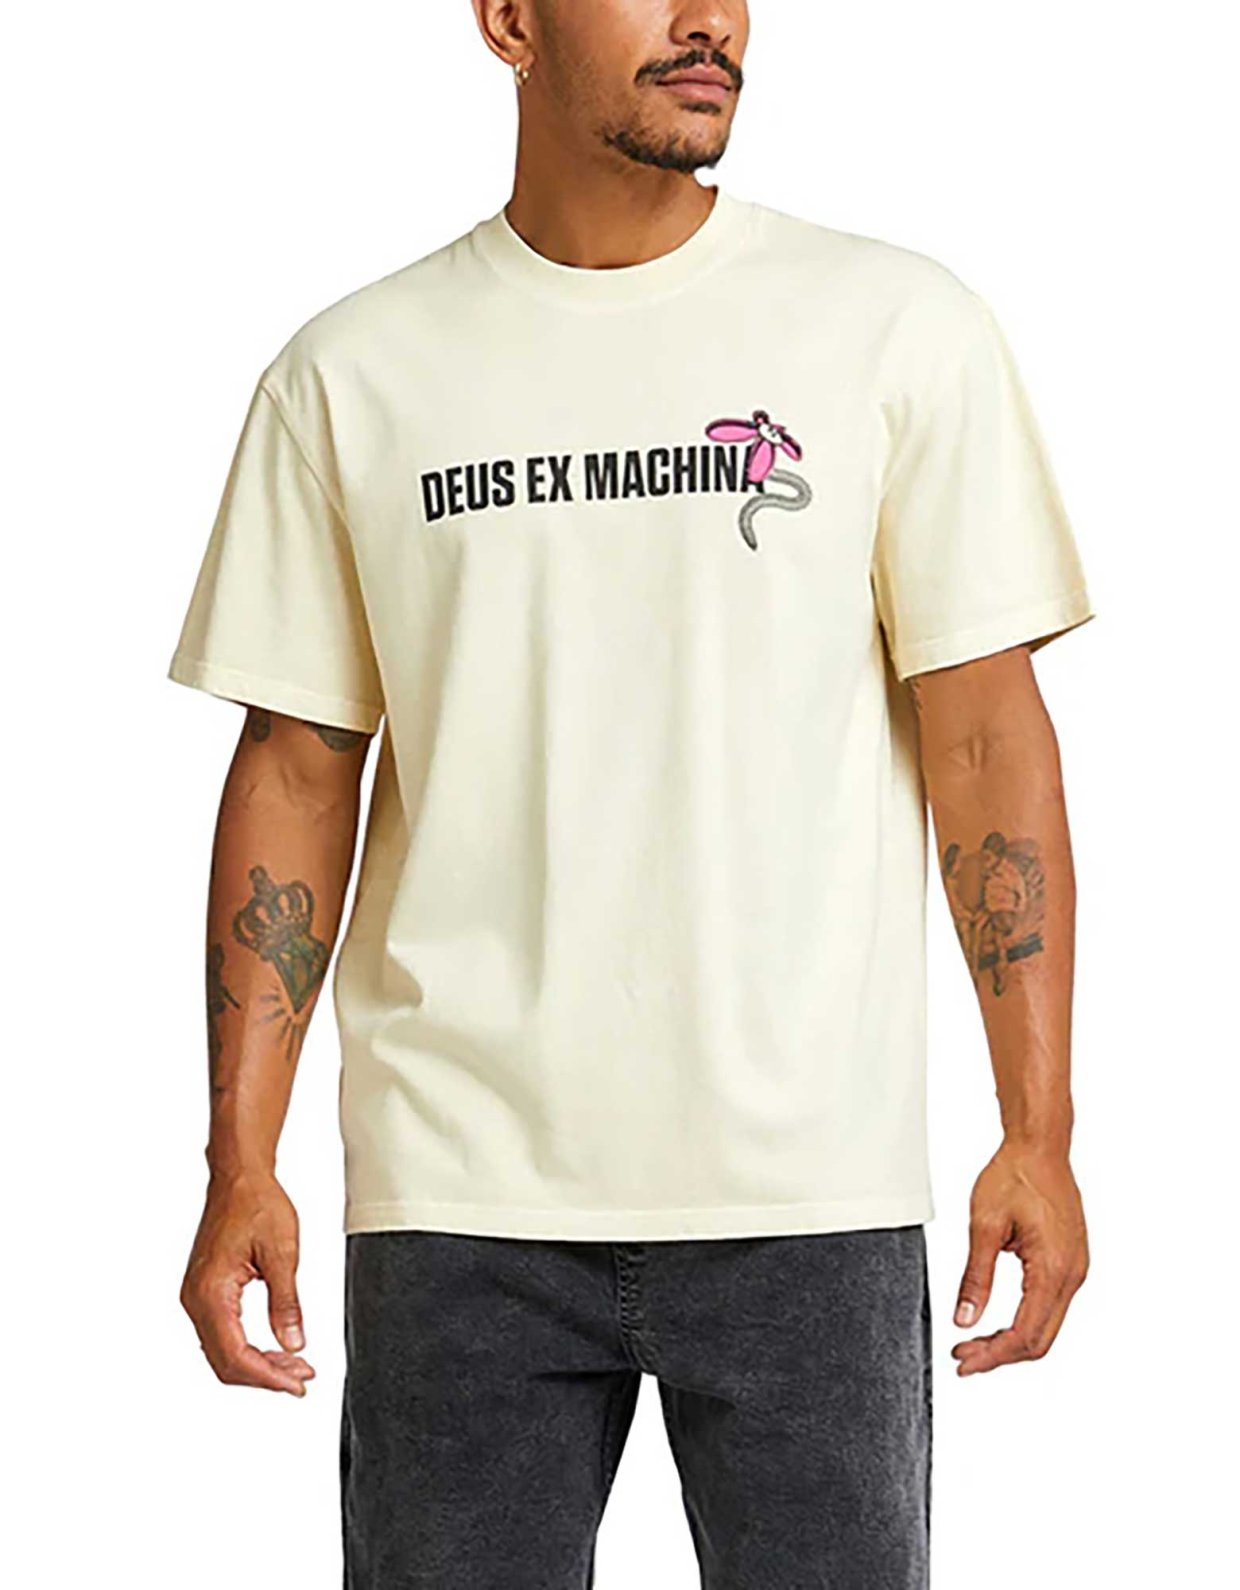 Deus Ex Machina Surf shop tee dirty white